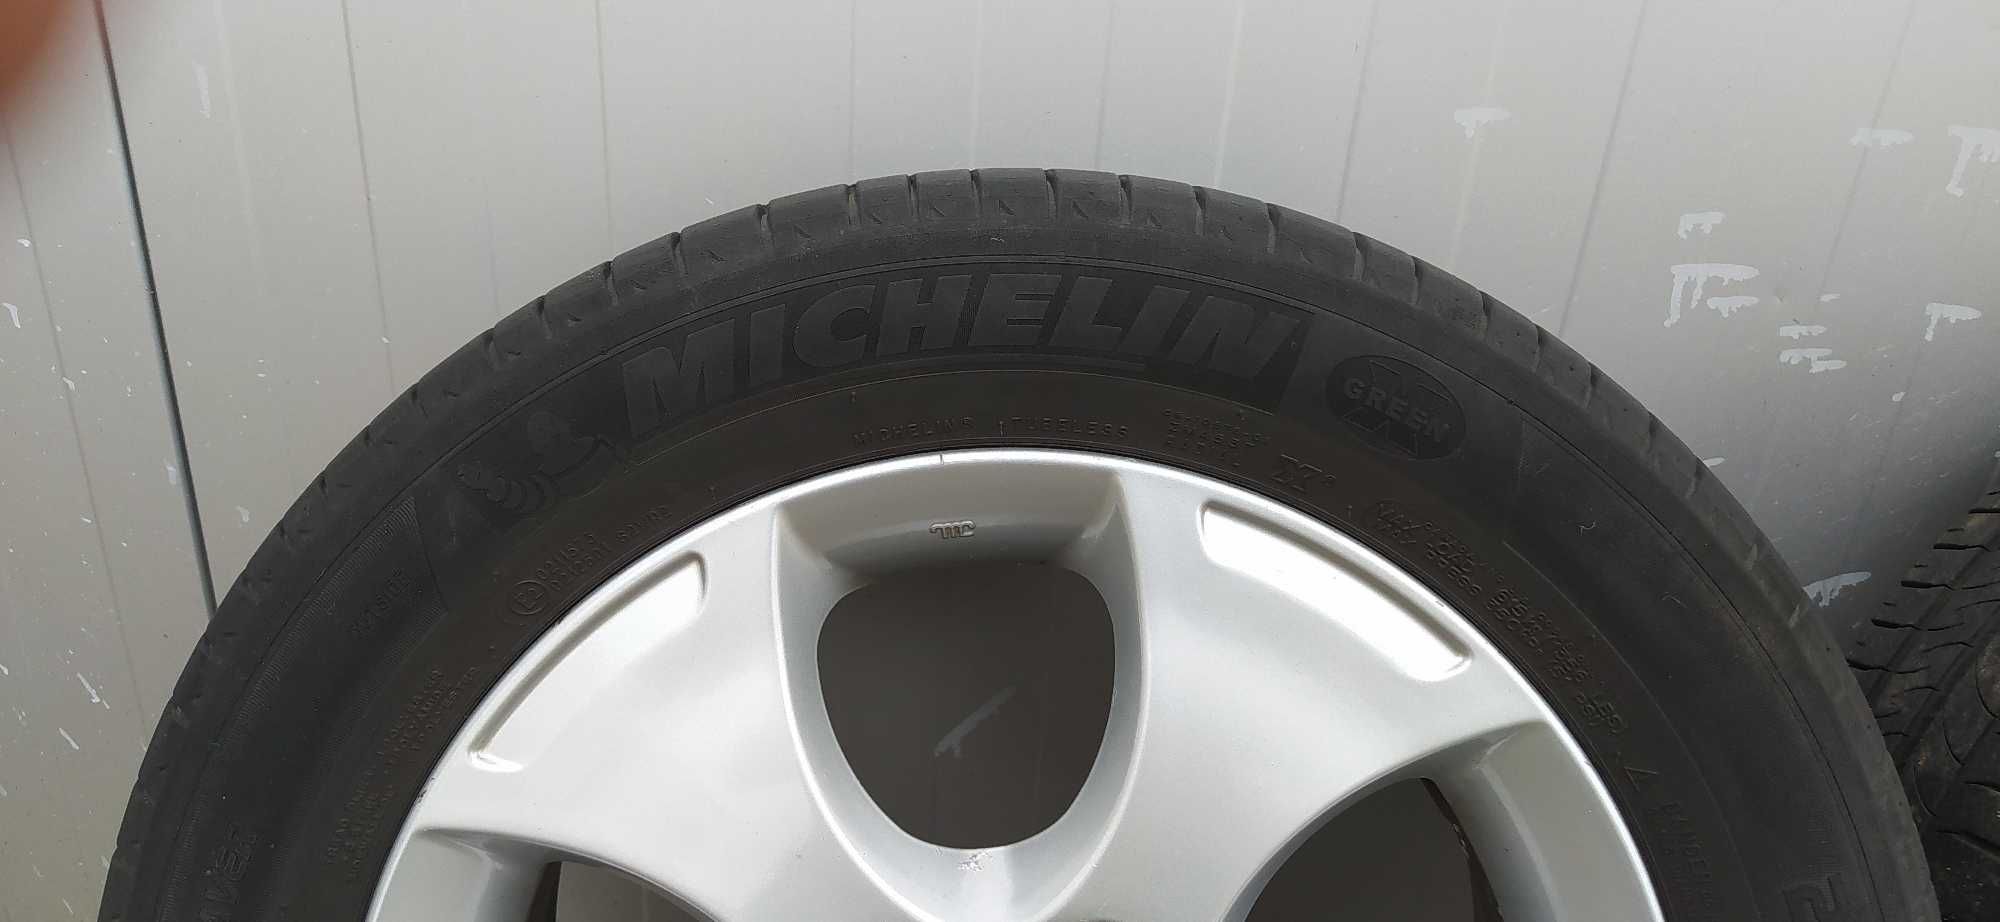 Sprzedam komplet opon letnich Michelin Energy Saver 205/55 r16